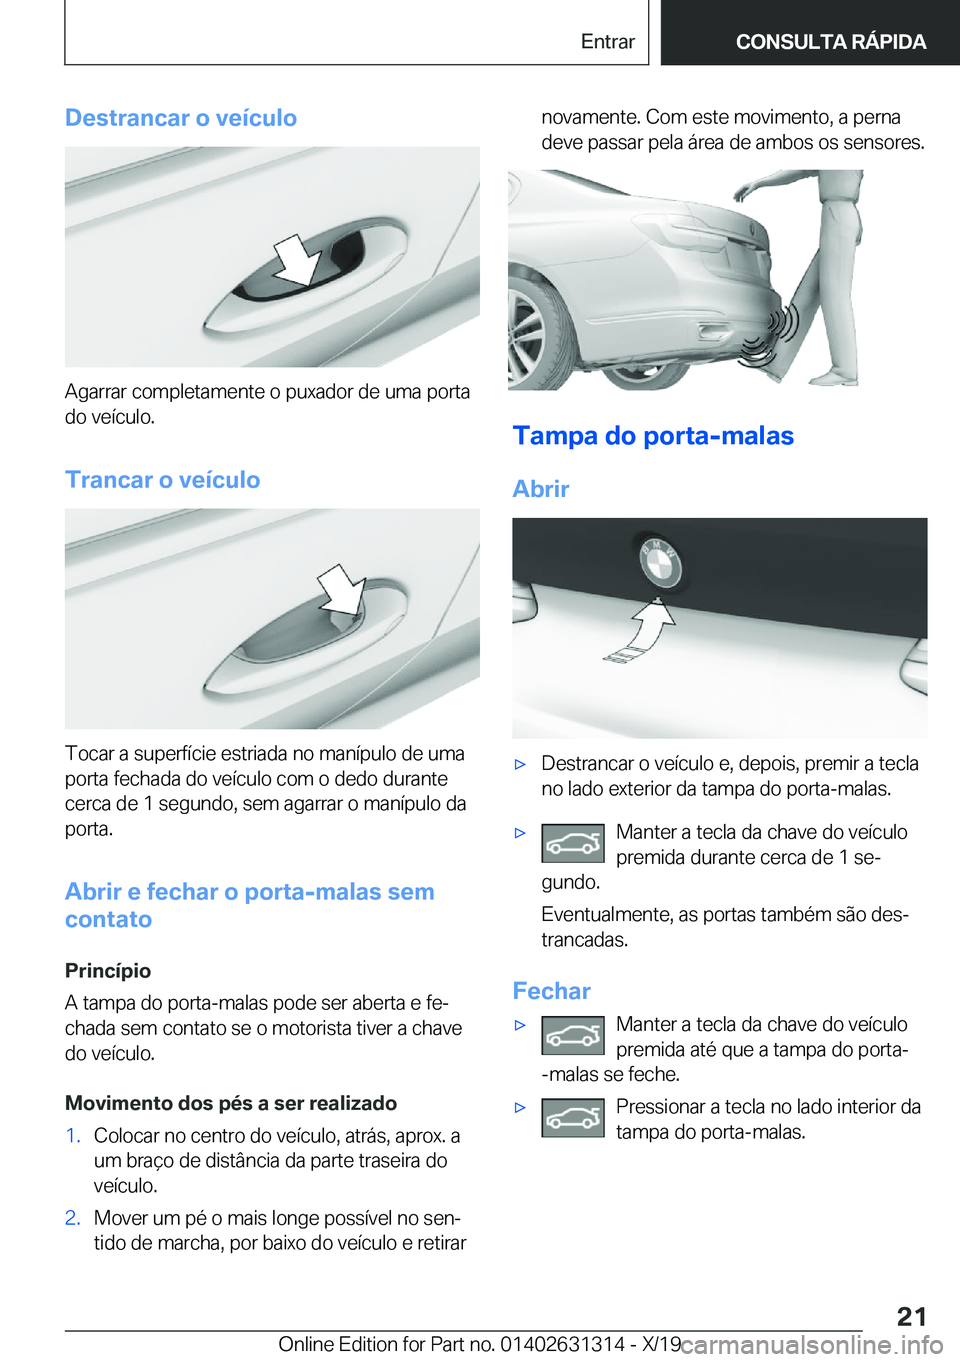 BMW M8 2020  Manual do condutor (in Portuguese) �D�e�s�t�r�a�n�c�a�r��o��v�e�